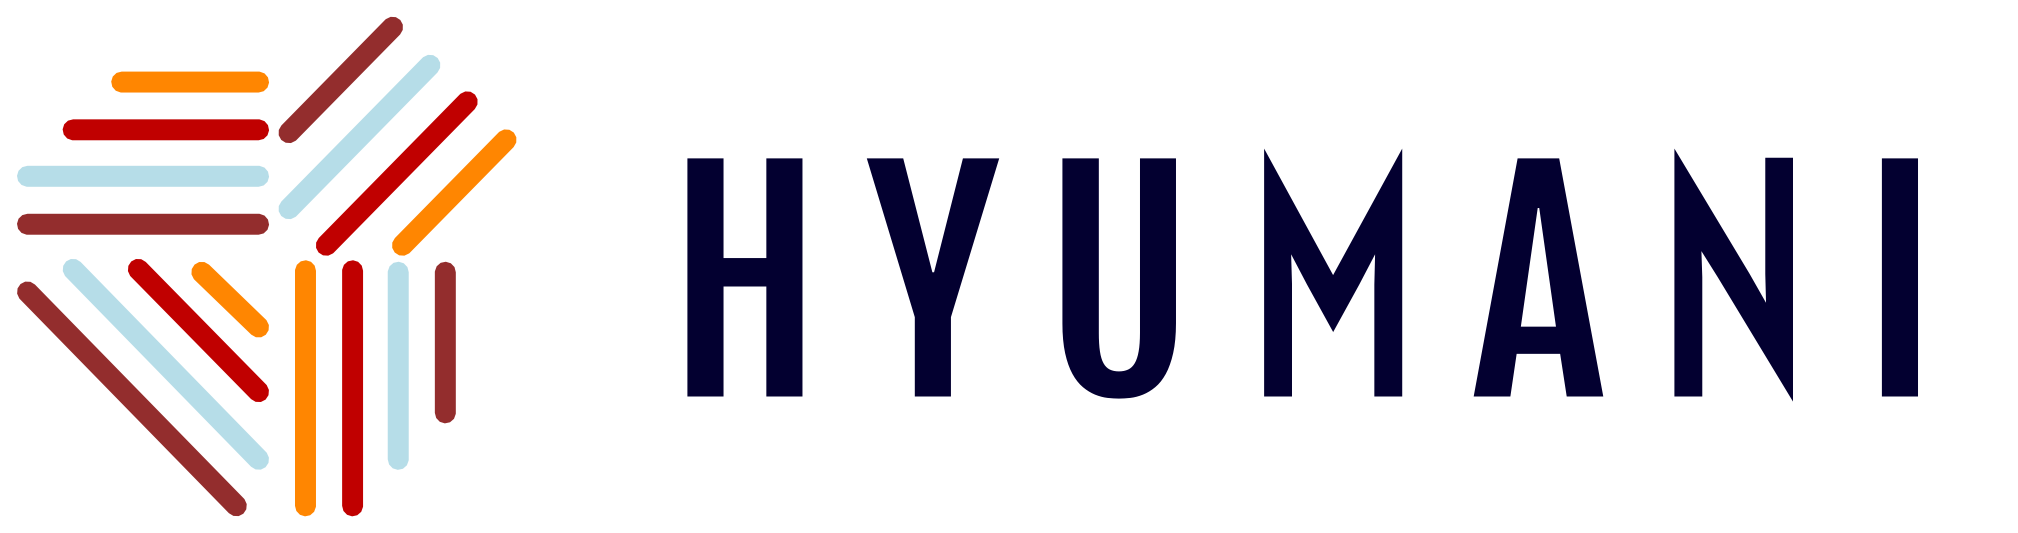 hyumani.com - self-worth, good communication, management, personal freedom by AI